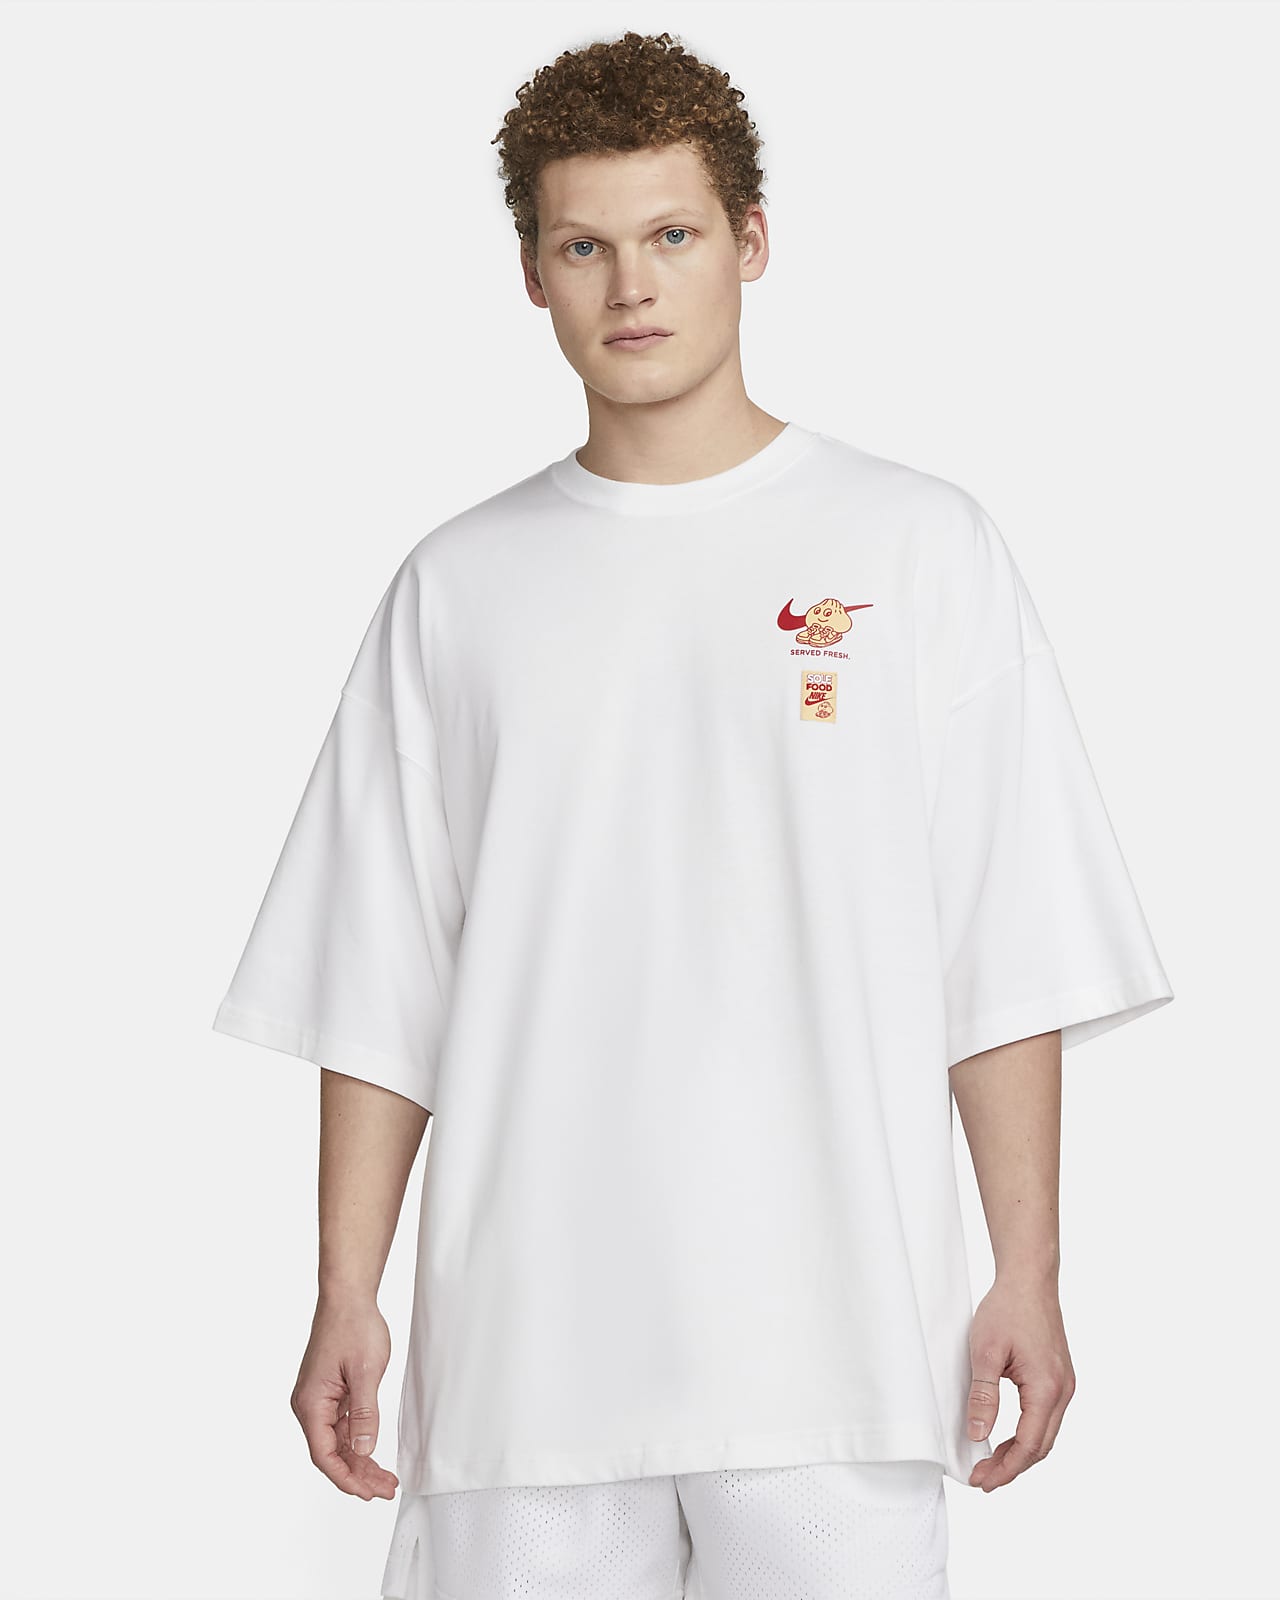 Nike Mens Sole Food T-Shirt - White/White Size L